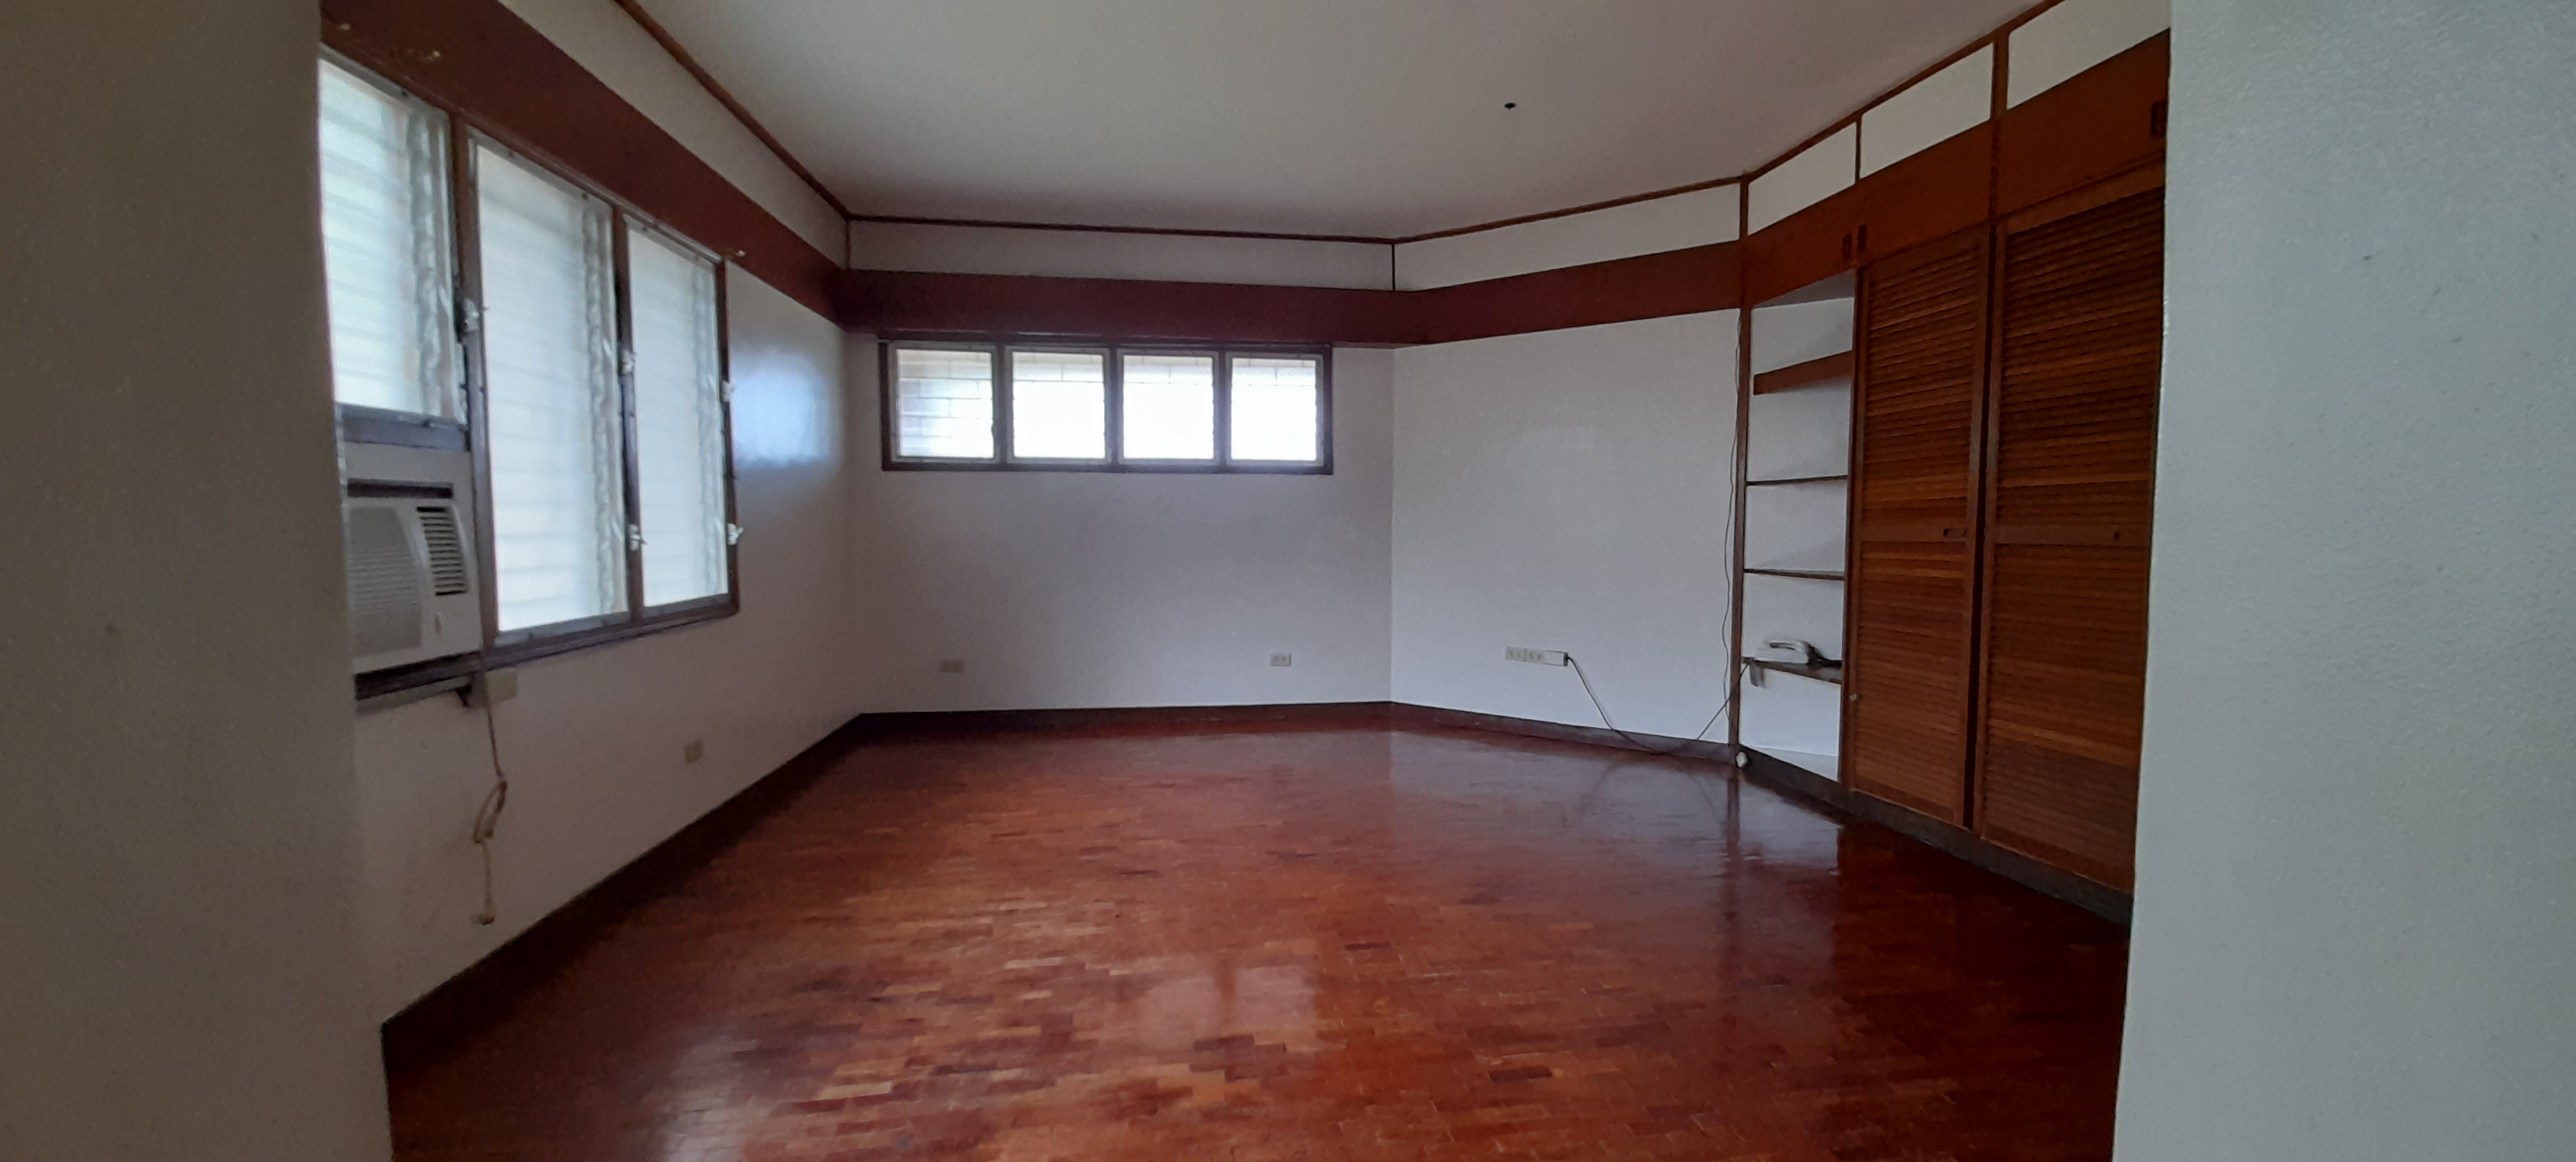 5-bedroom-with-3-car-parking-house-in-talamban-cebu-city